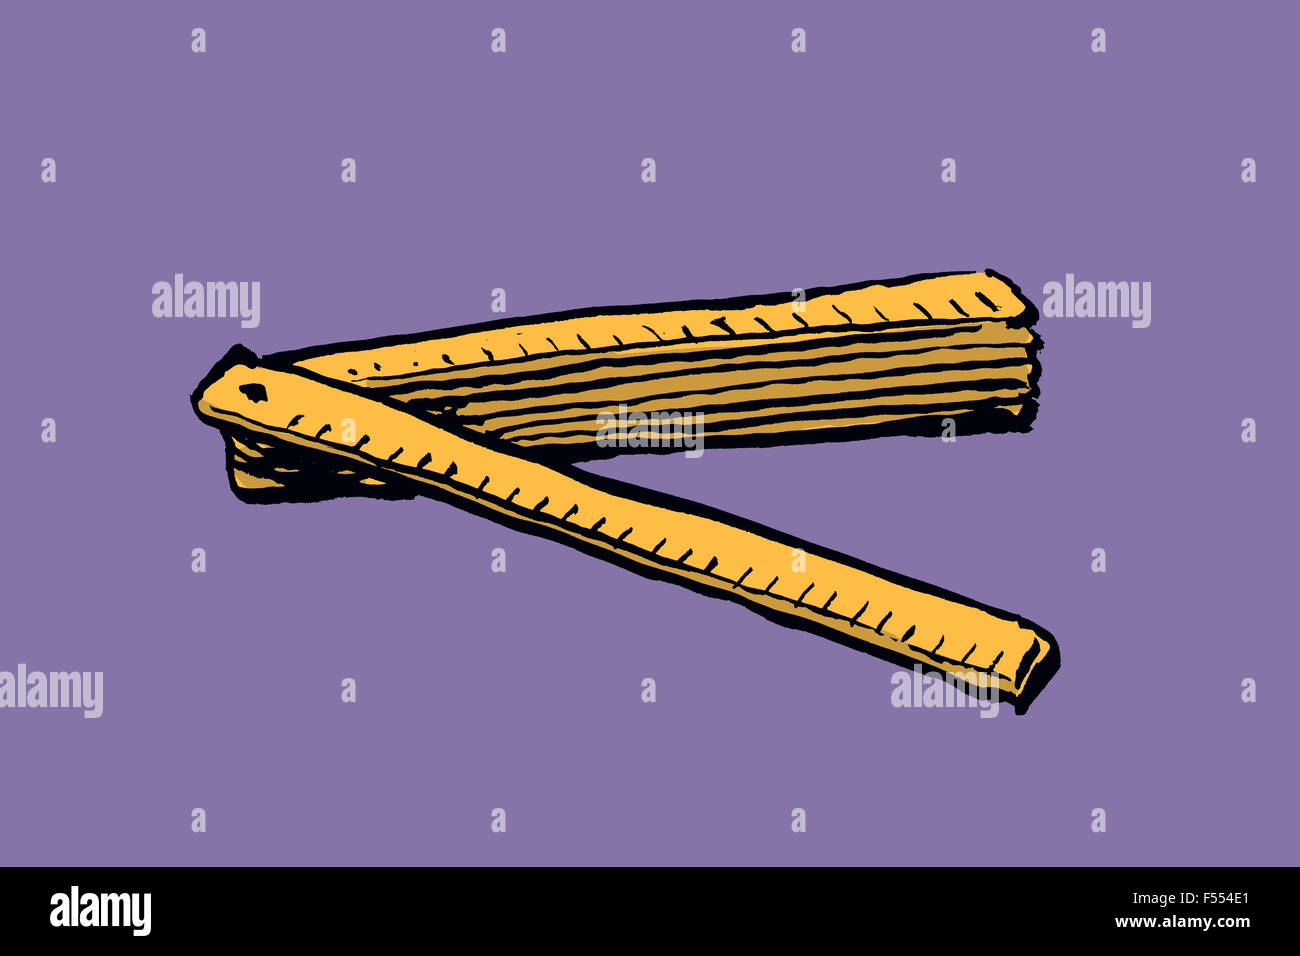 Illustration of foldable ruler against purple background Stock Photo